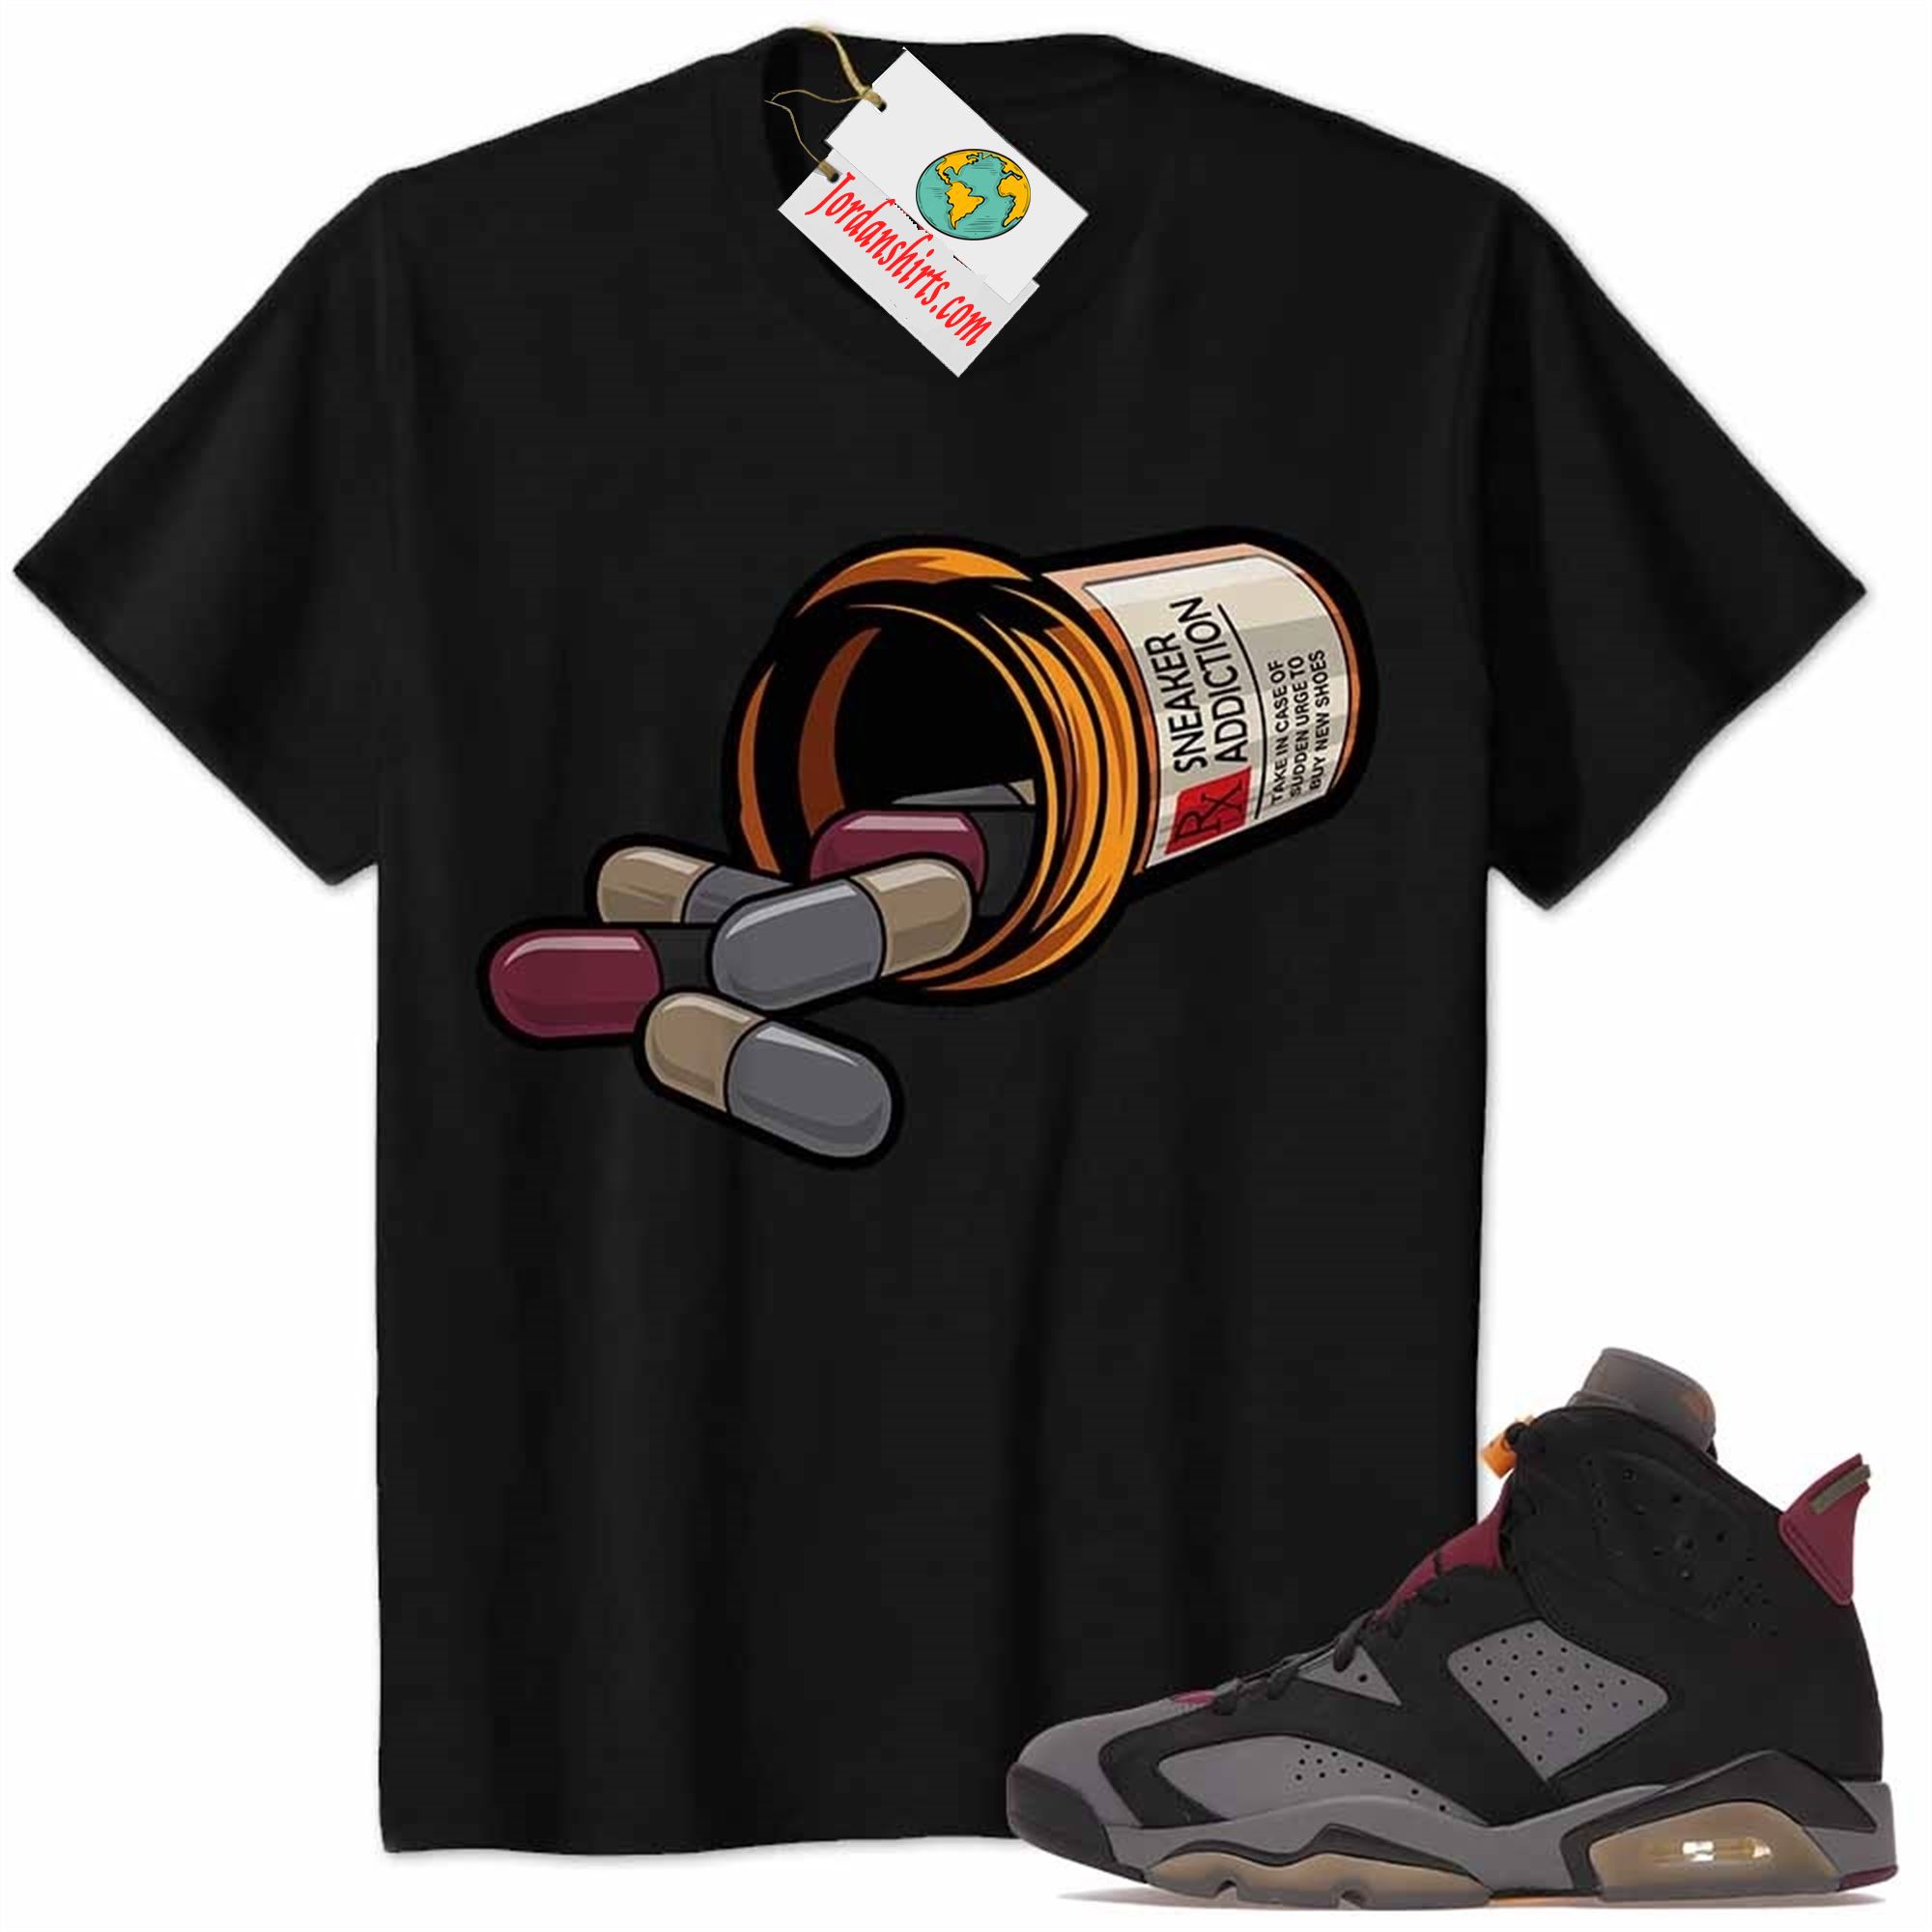 Jordan 6 Shirt, Rx Drugs Pill Bottle Sneaker Addiction Black Air Jordan 6 Bordeaux 6s Size Up To 5xl